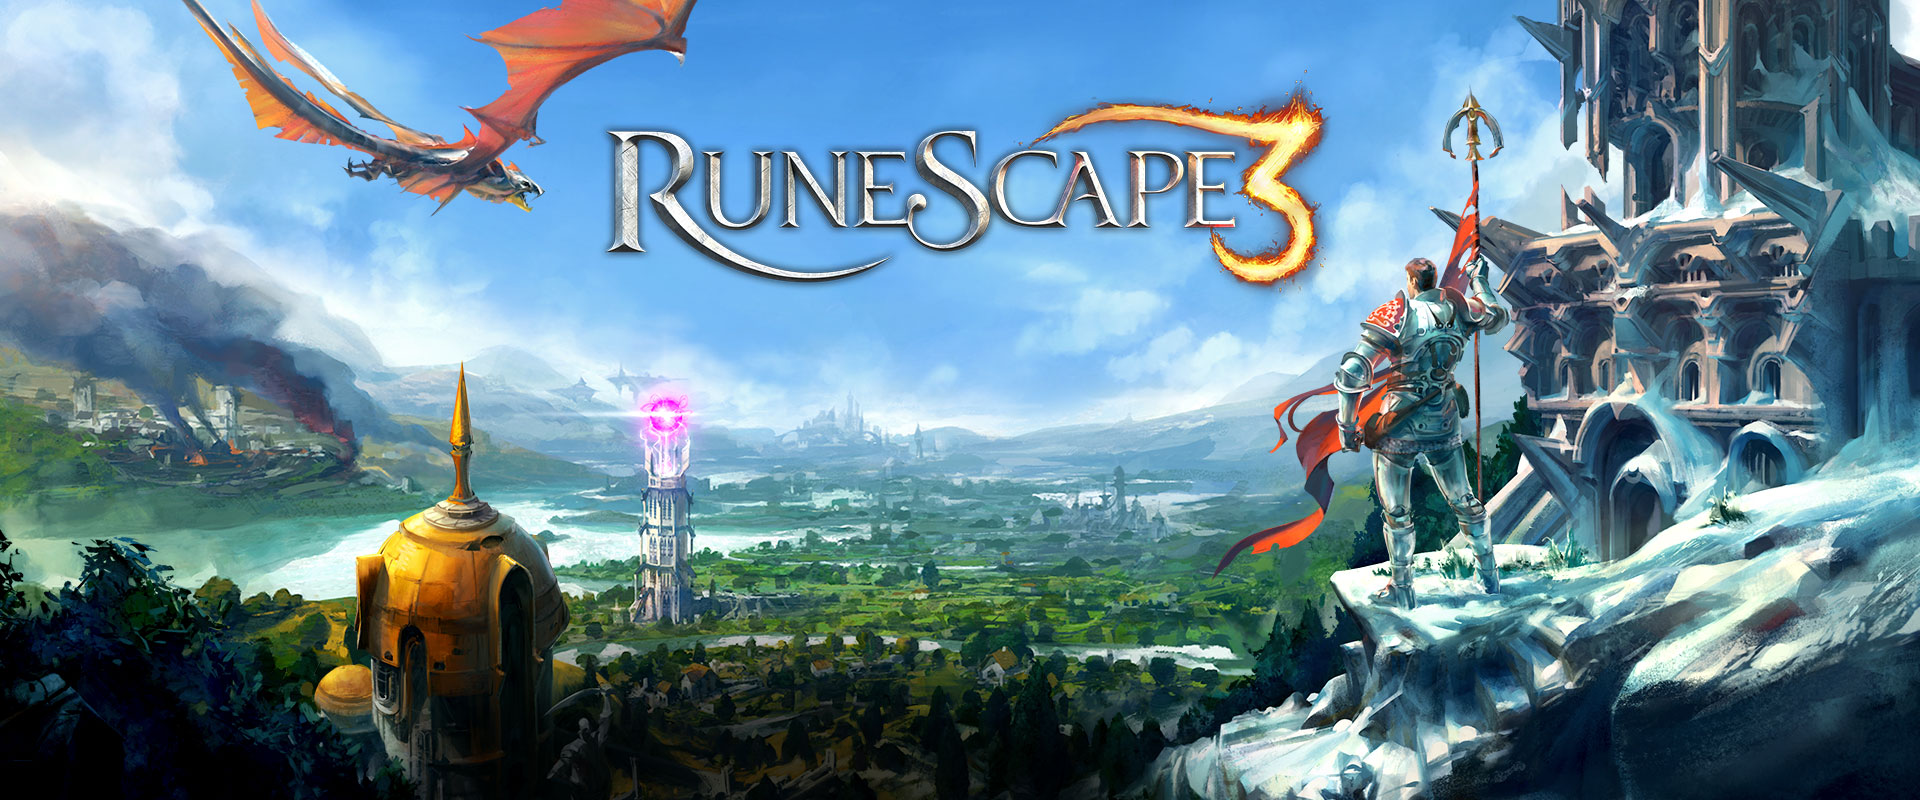 Runescape 3 Download